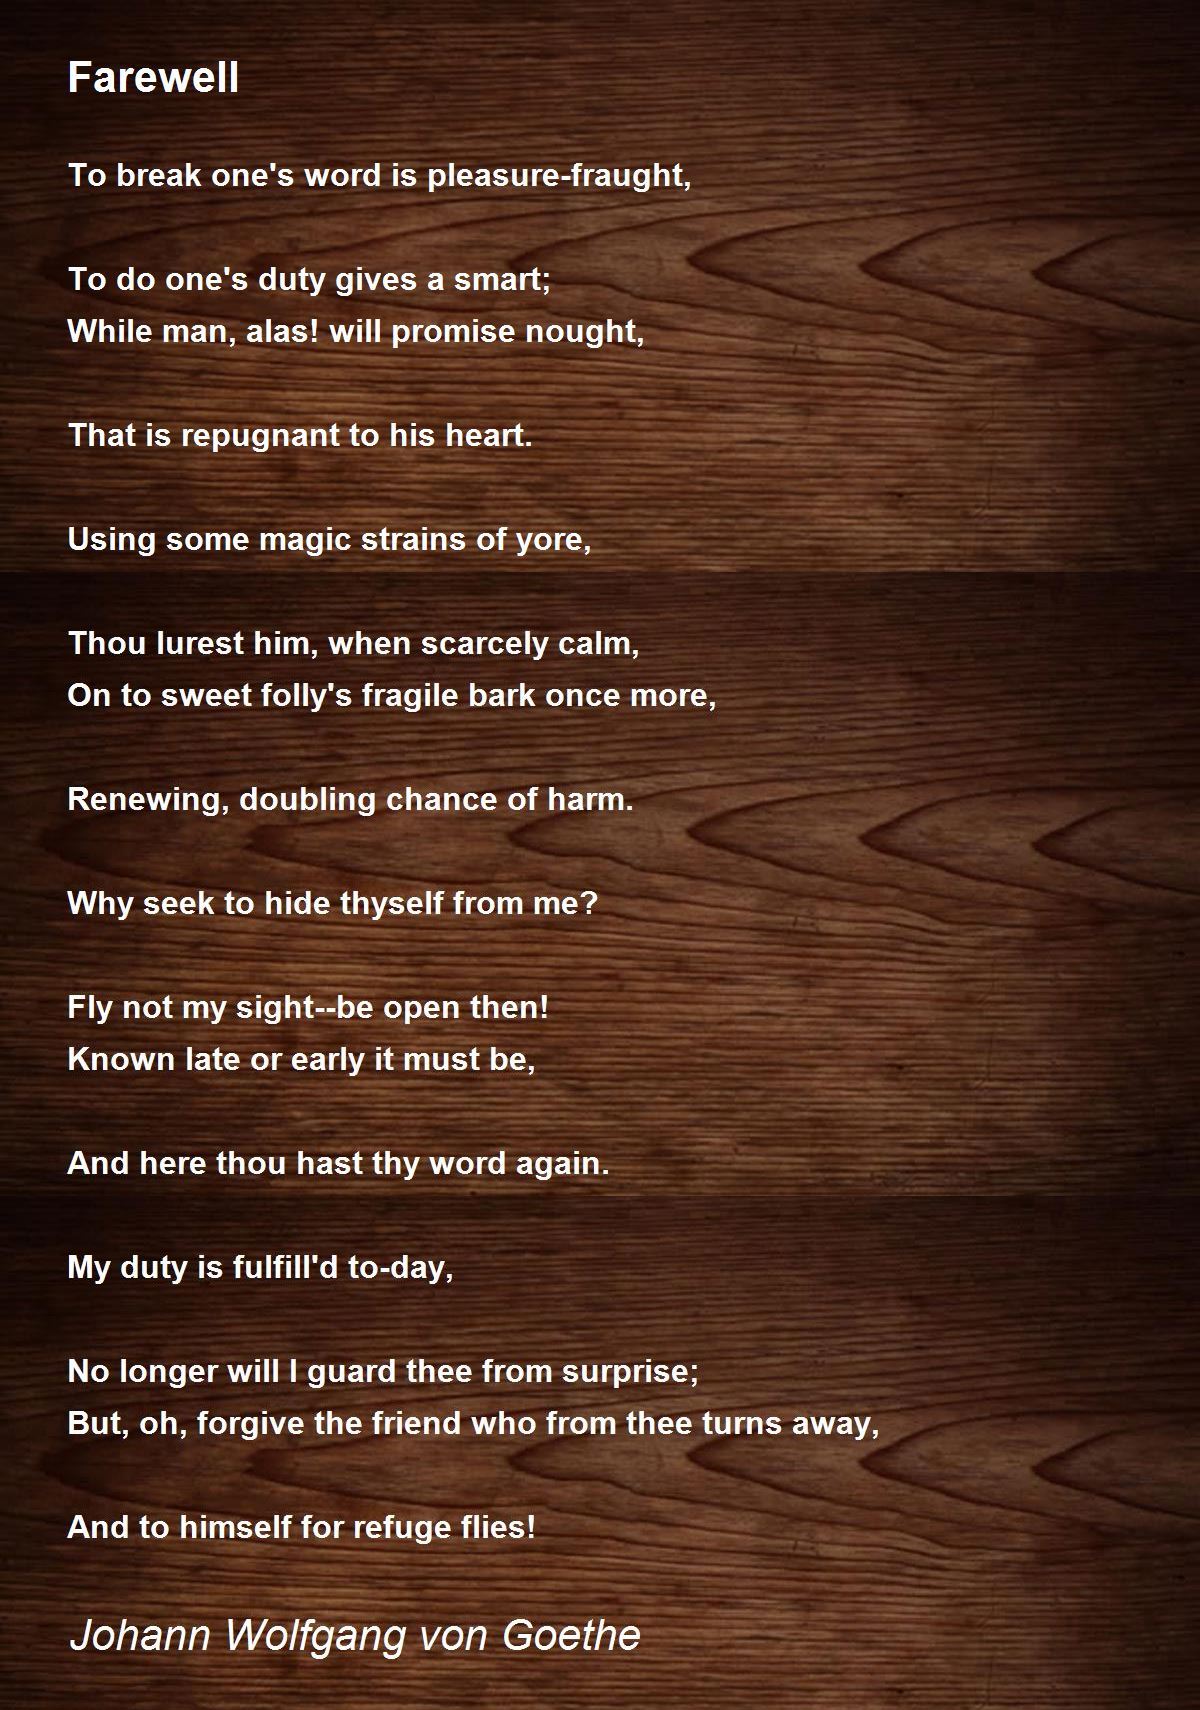 Farewell Poem by Johann Wolfgang von Goethe - Poem Hunter